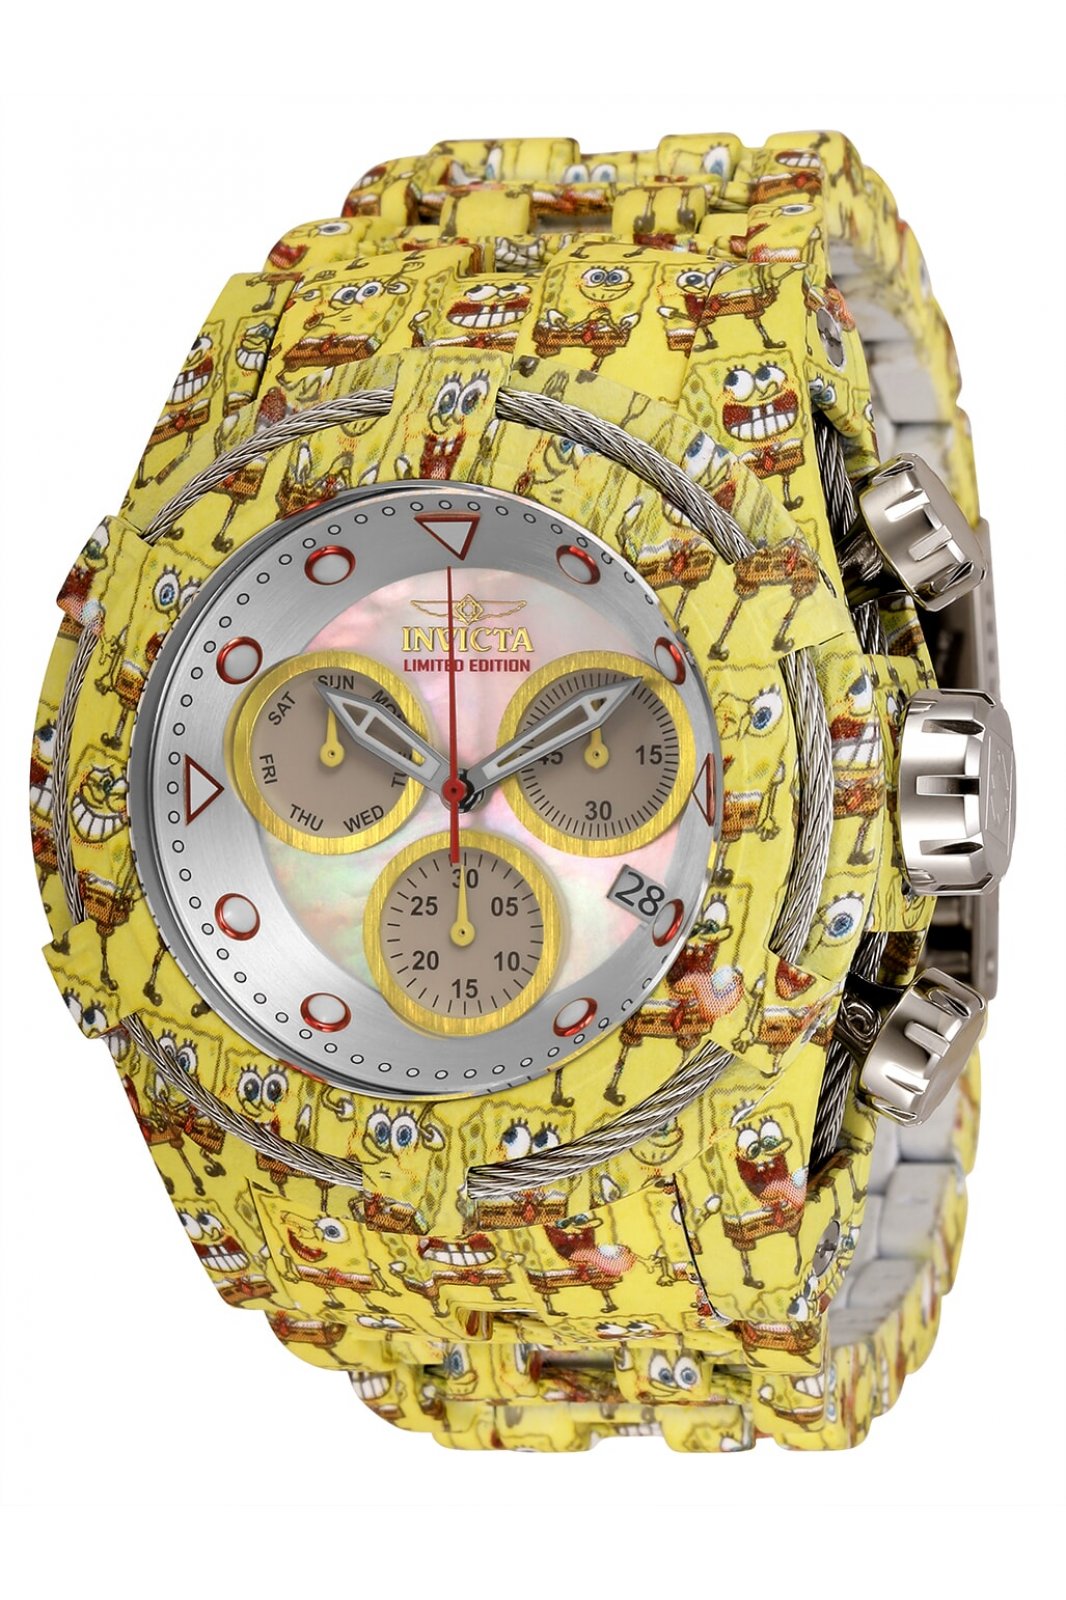 Invicta Spongebob And Patrick Quartz Watch Limited Edition